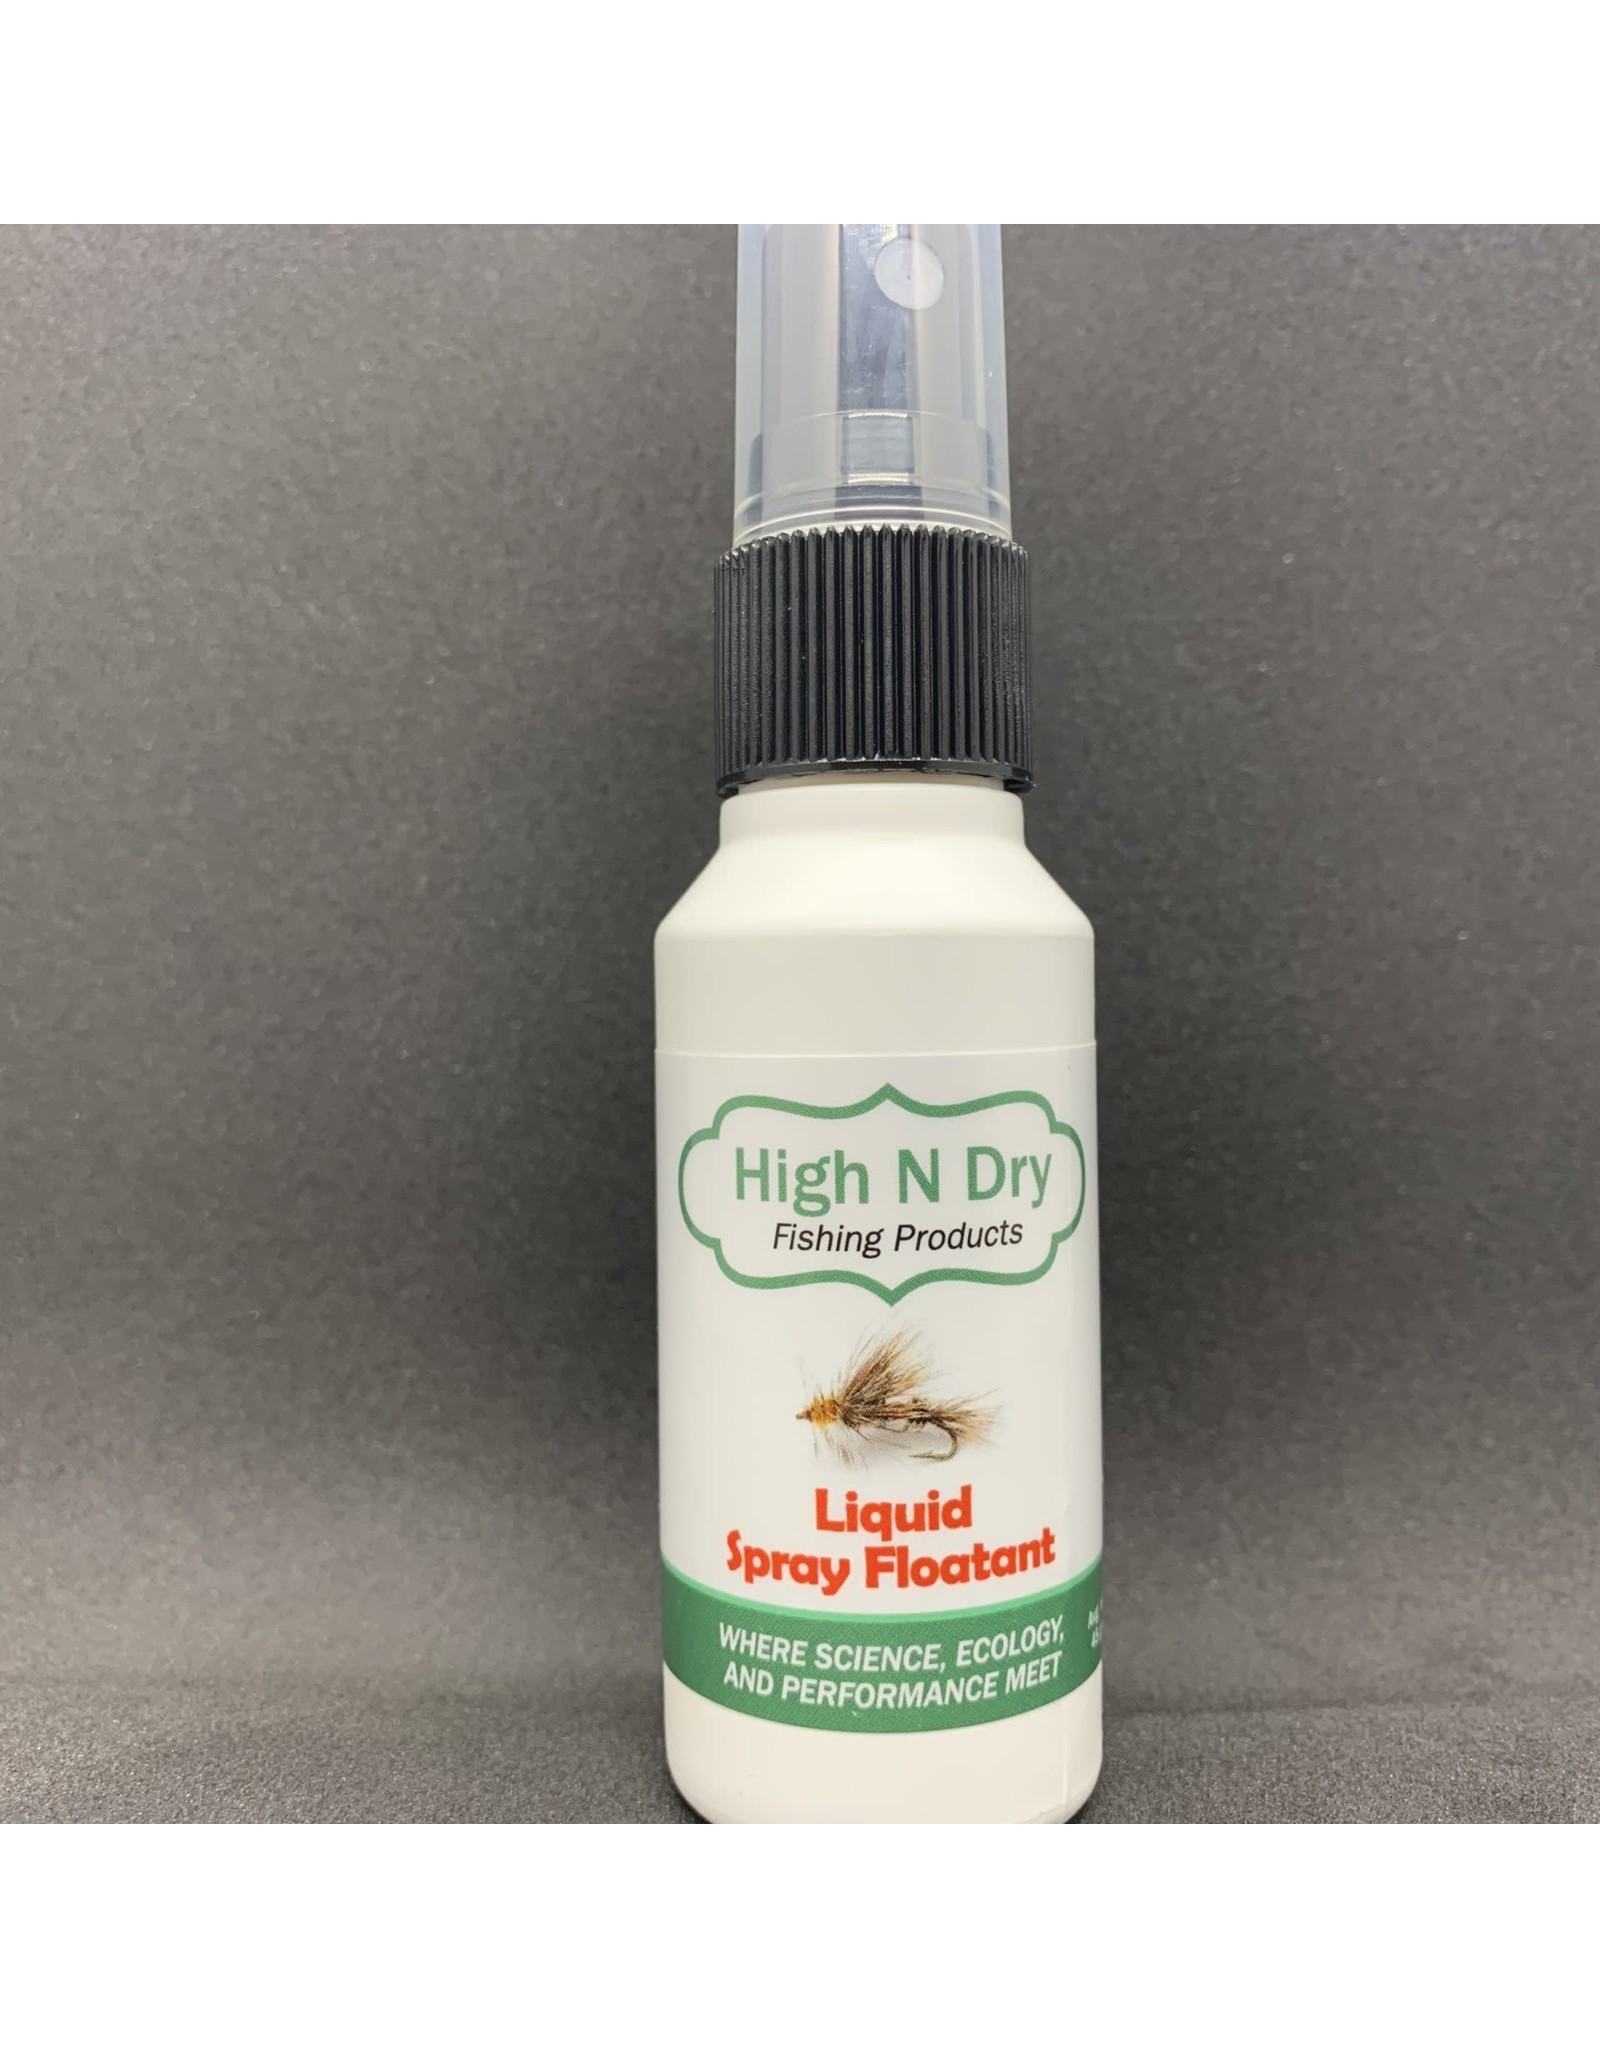 HIGH N DRY FISHING PRODUCTS HIGH N DRY Liquid Spray Floatant